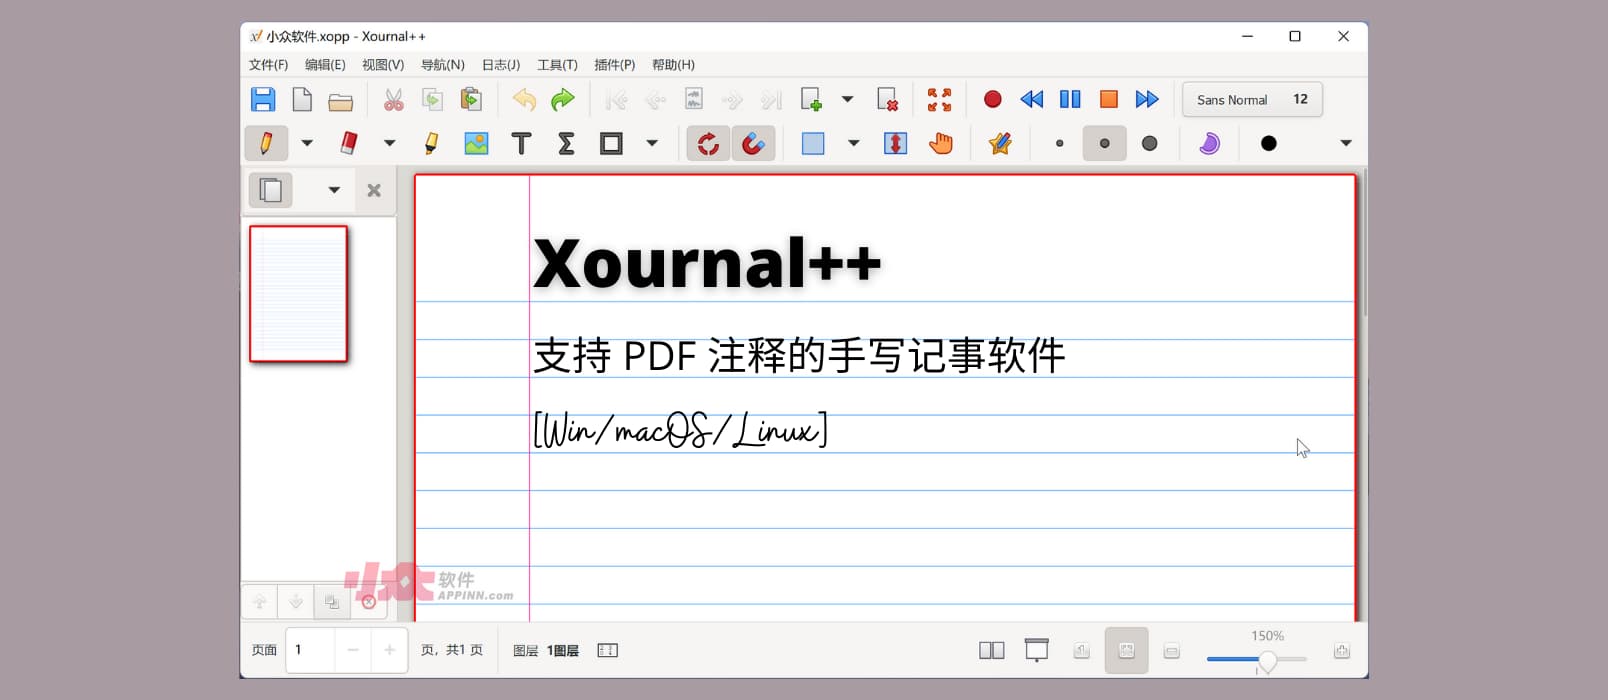 Xournal++ - 支持 PDF 注释的手写记事软件[Win/macOS/Linux]